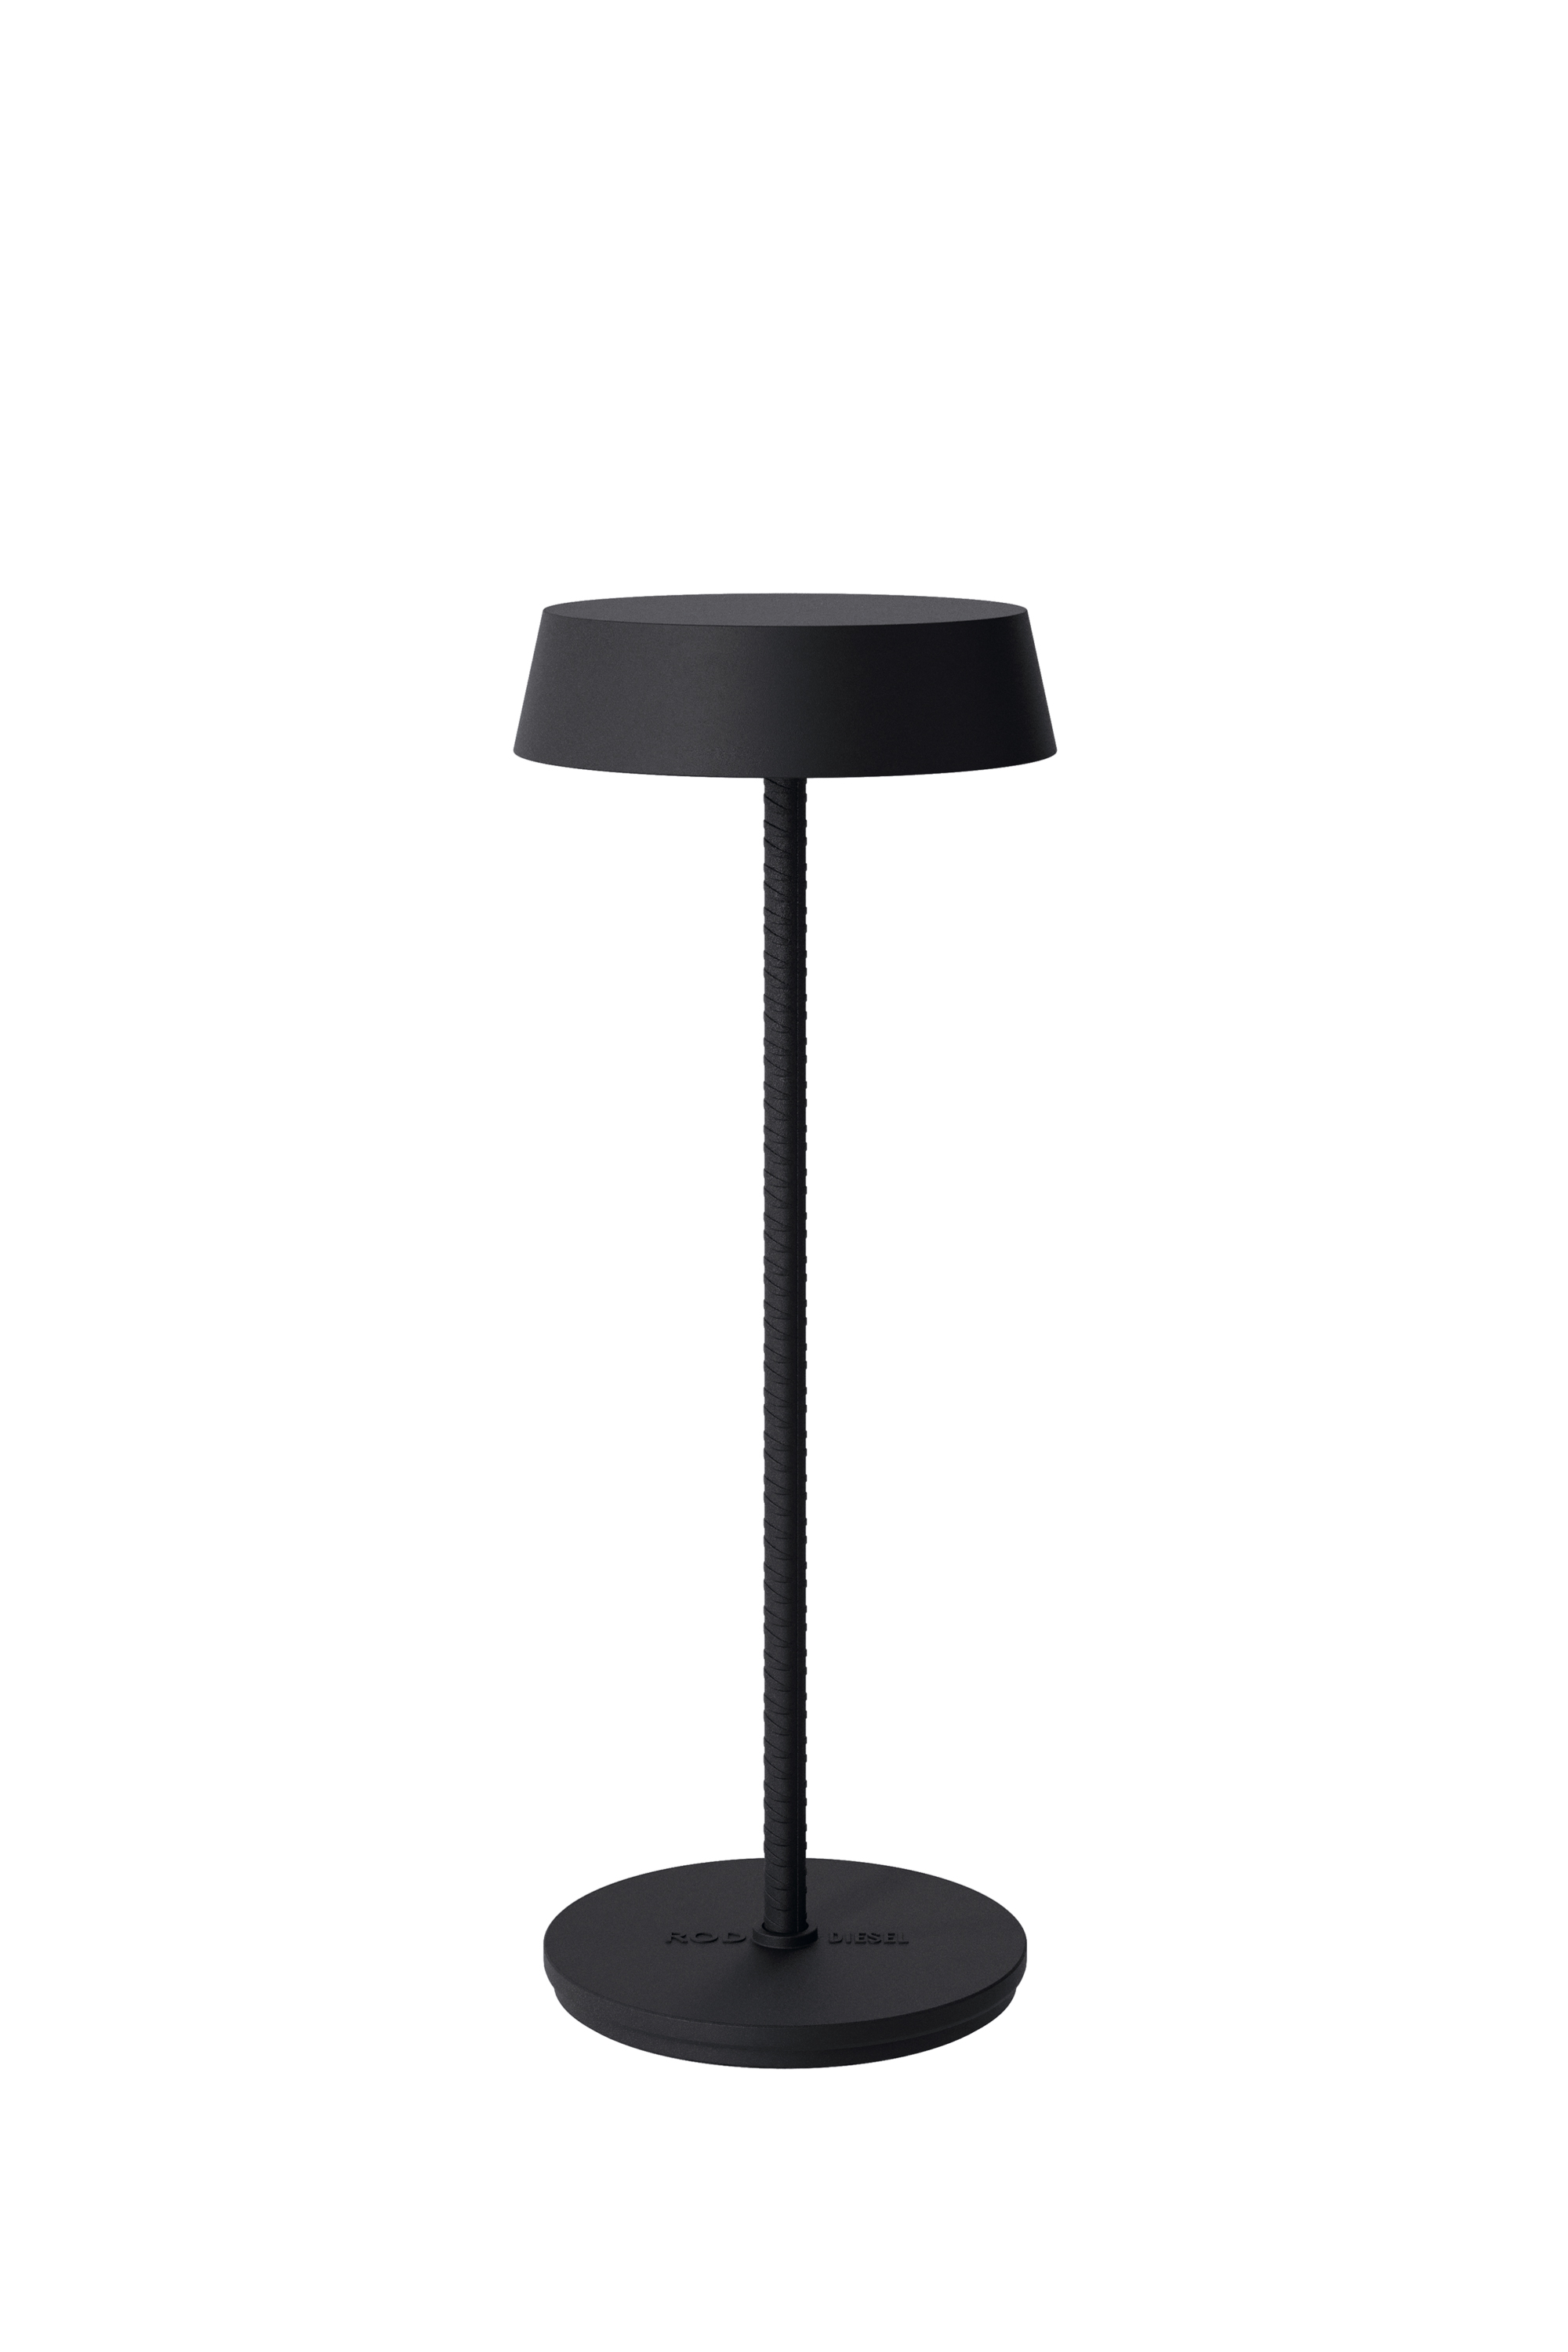 51181 2020 ROD CORDLESS TABLE LAMP DARK, Noir - Eclairage